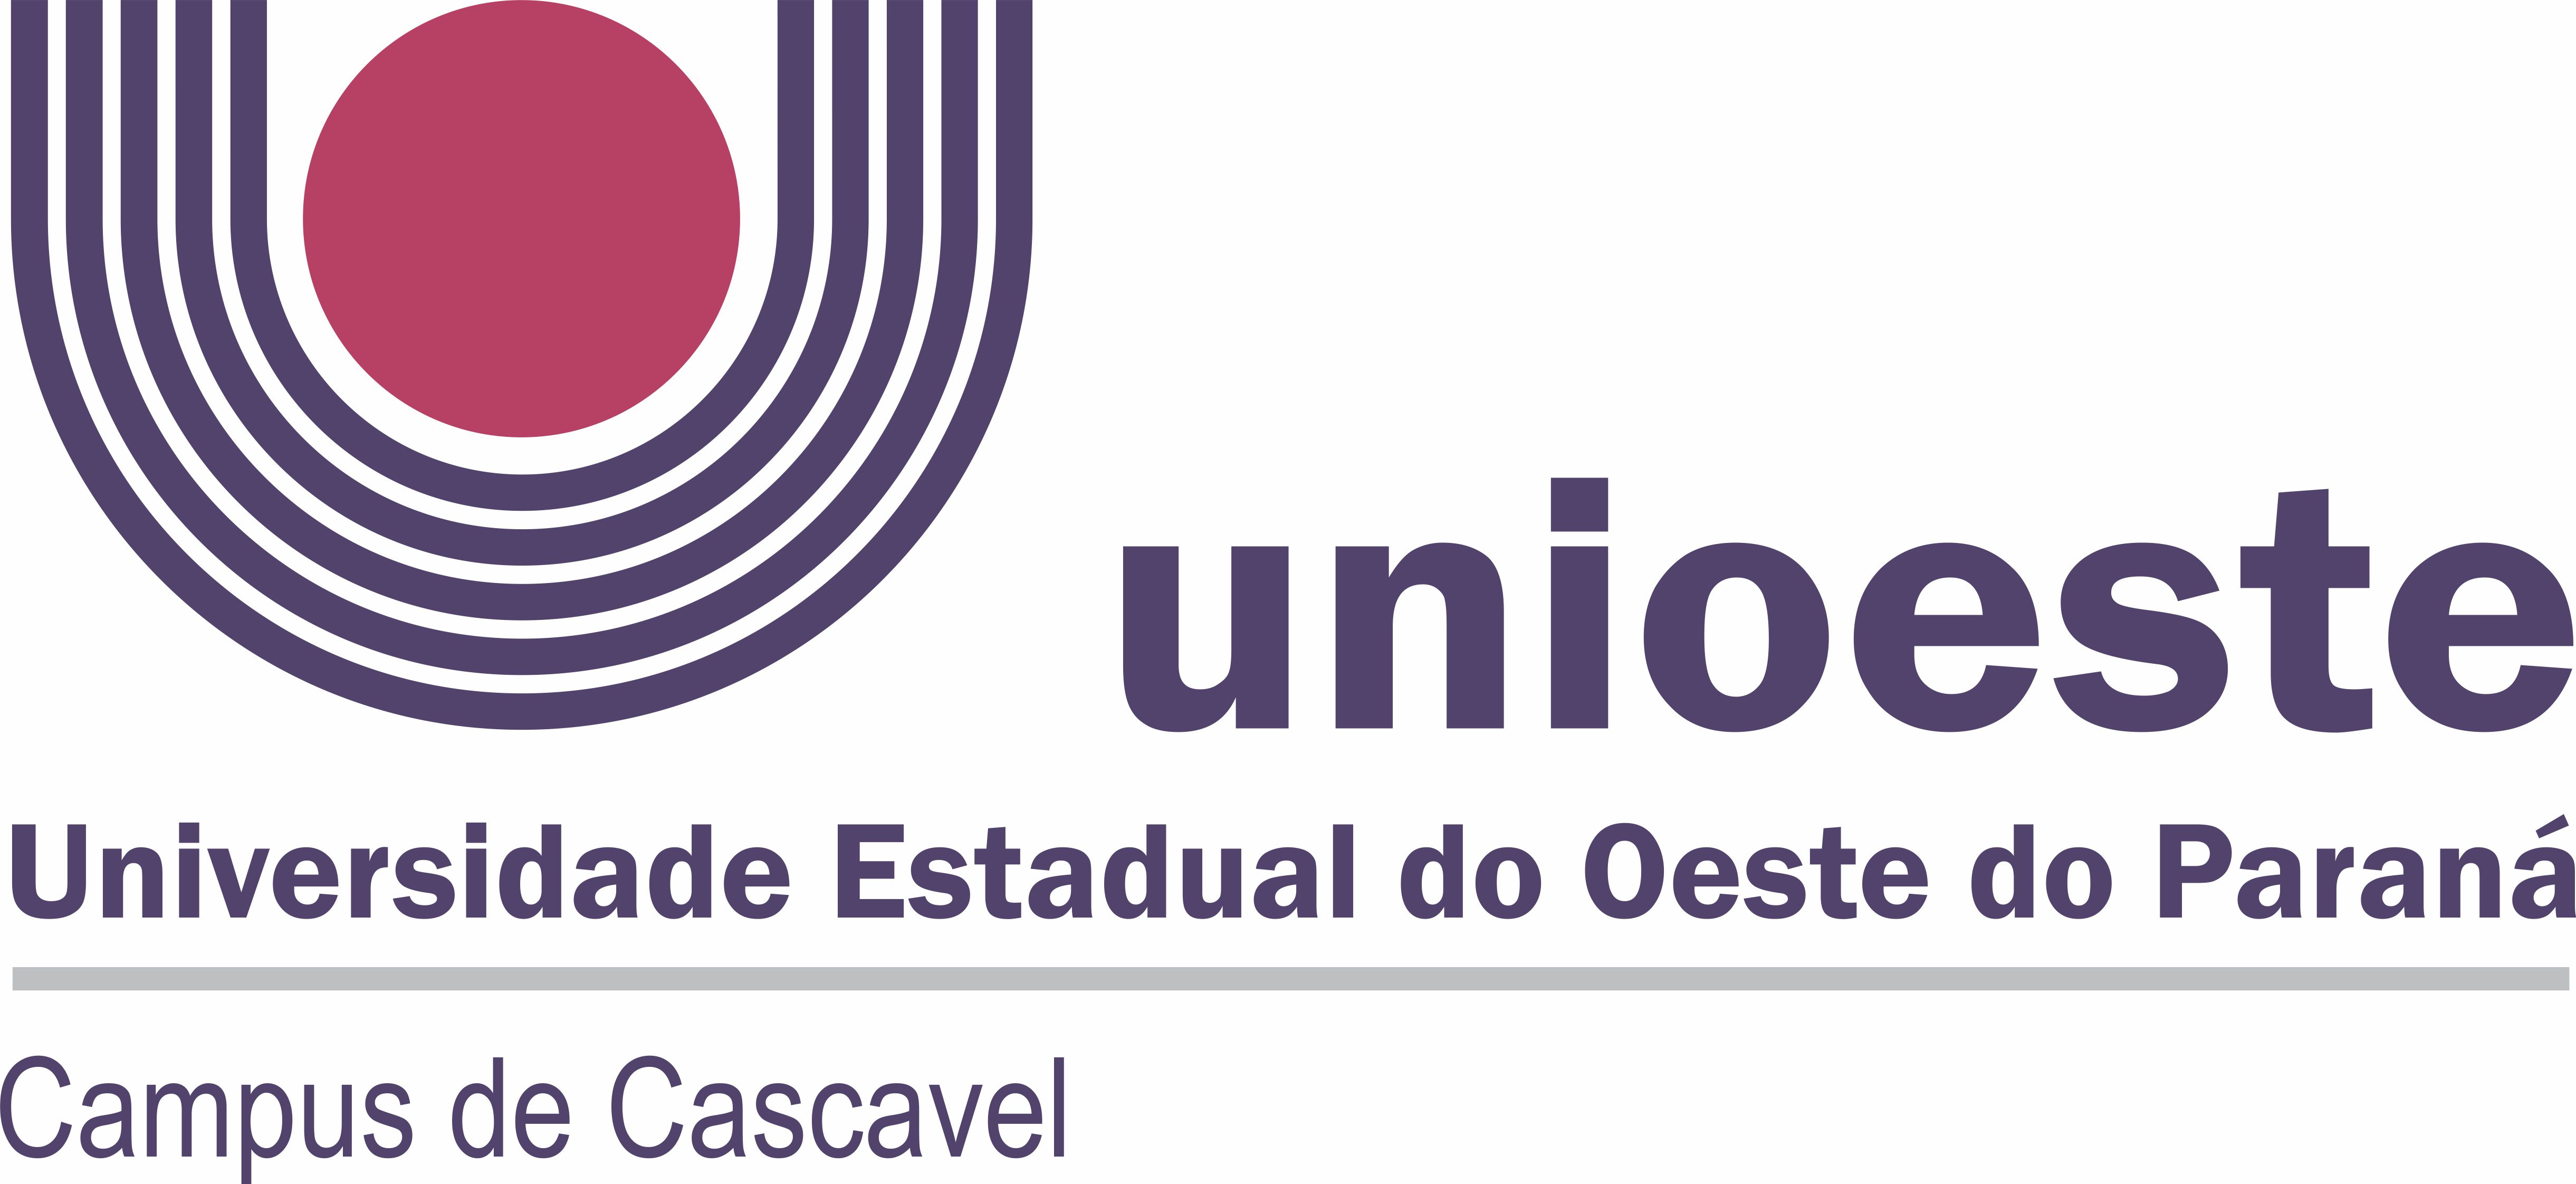 Logotipo Unioeste CAMPUS CASCAVEL copy